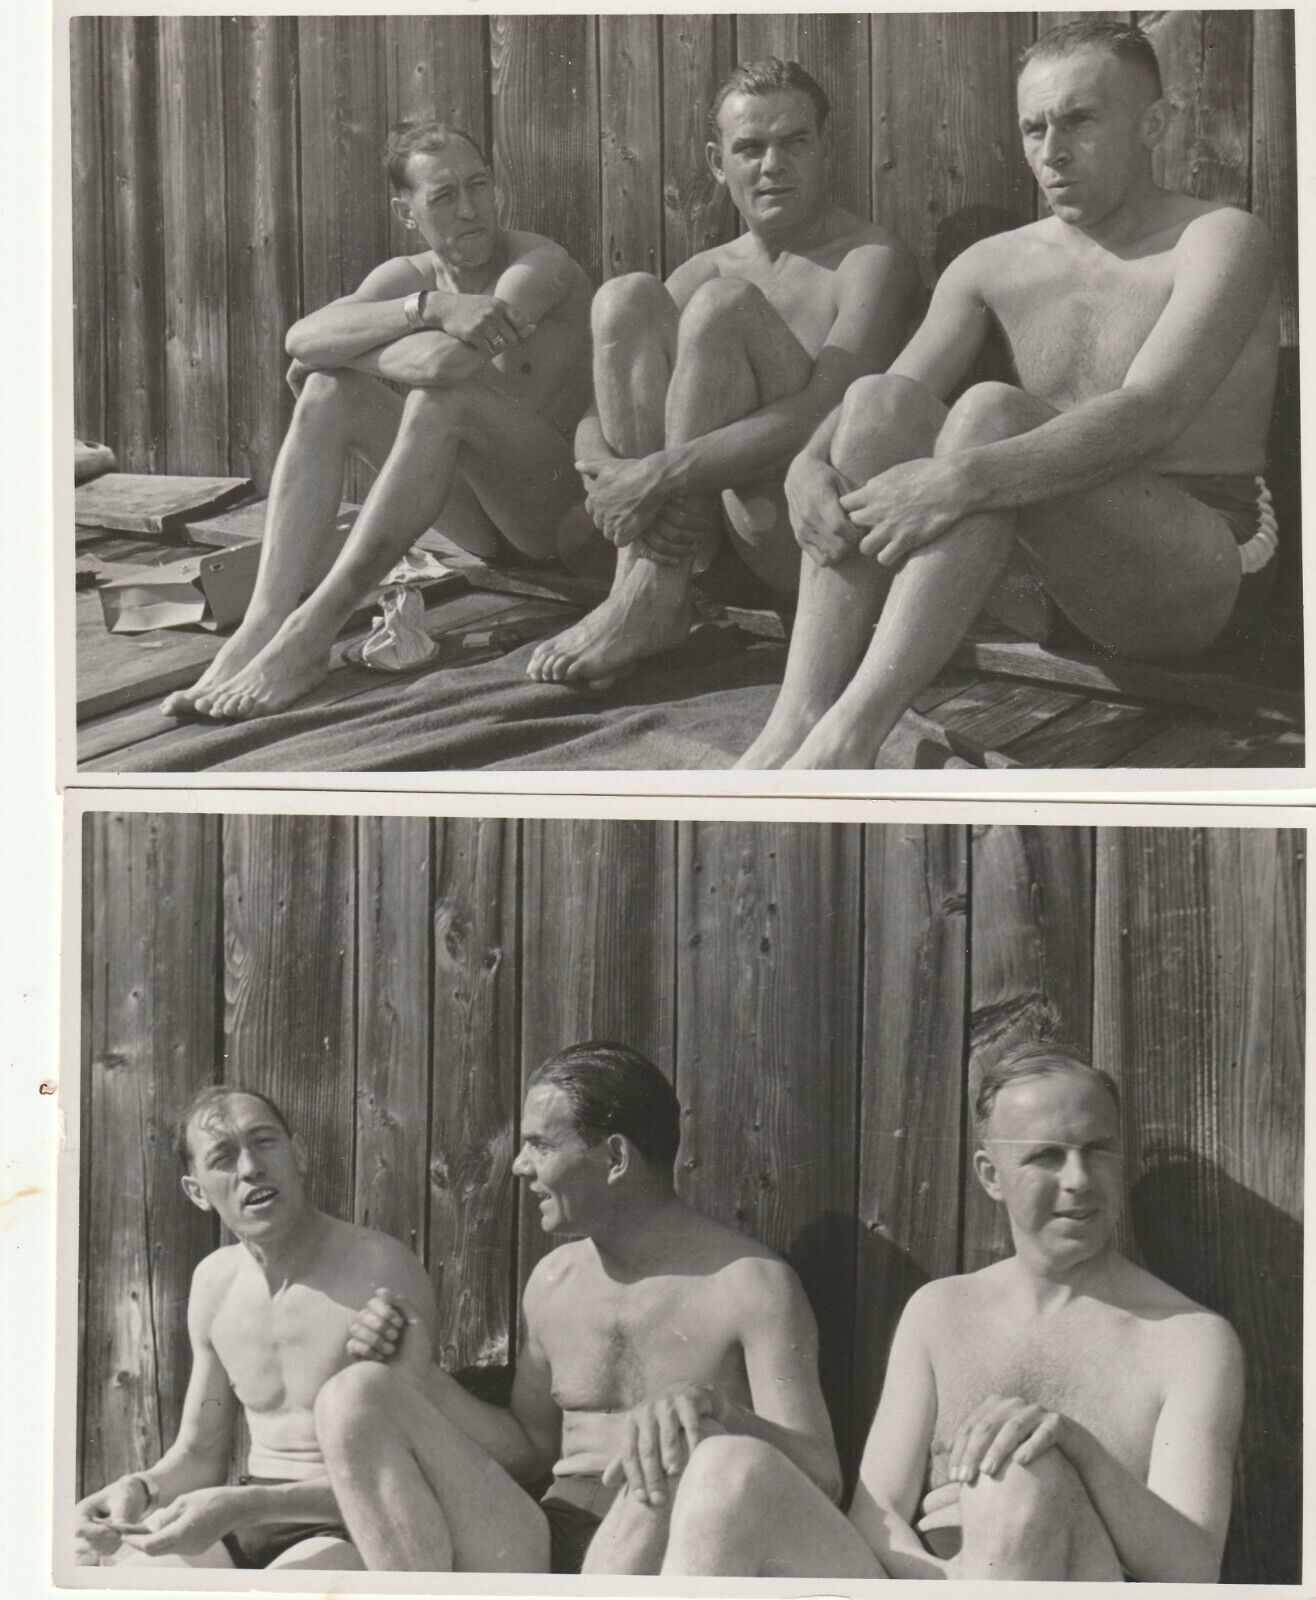 Vintage photograph, shirtless mature men sunbathing, gay interest 